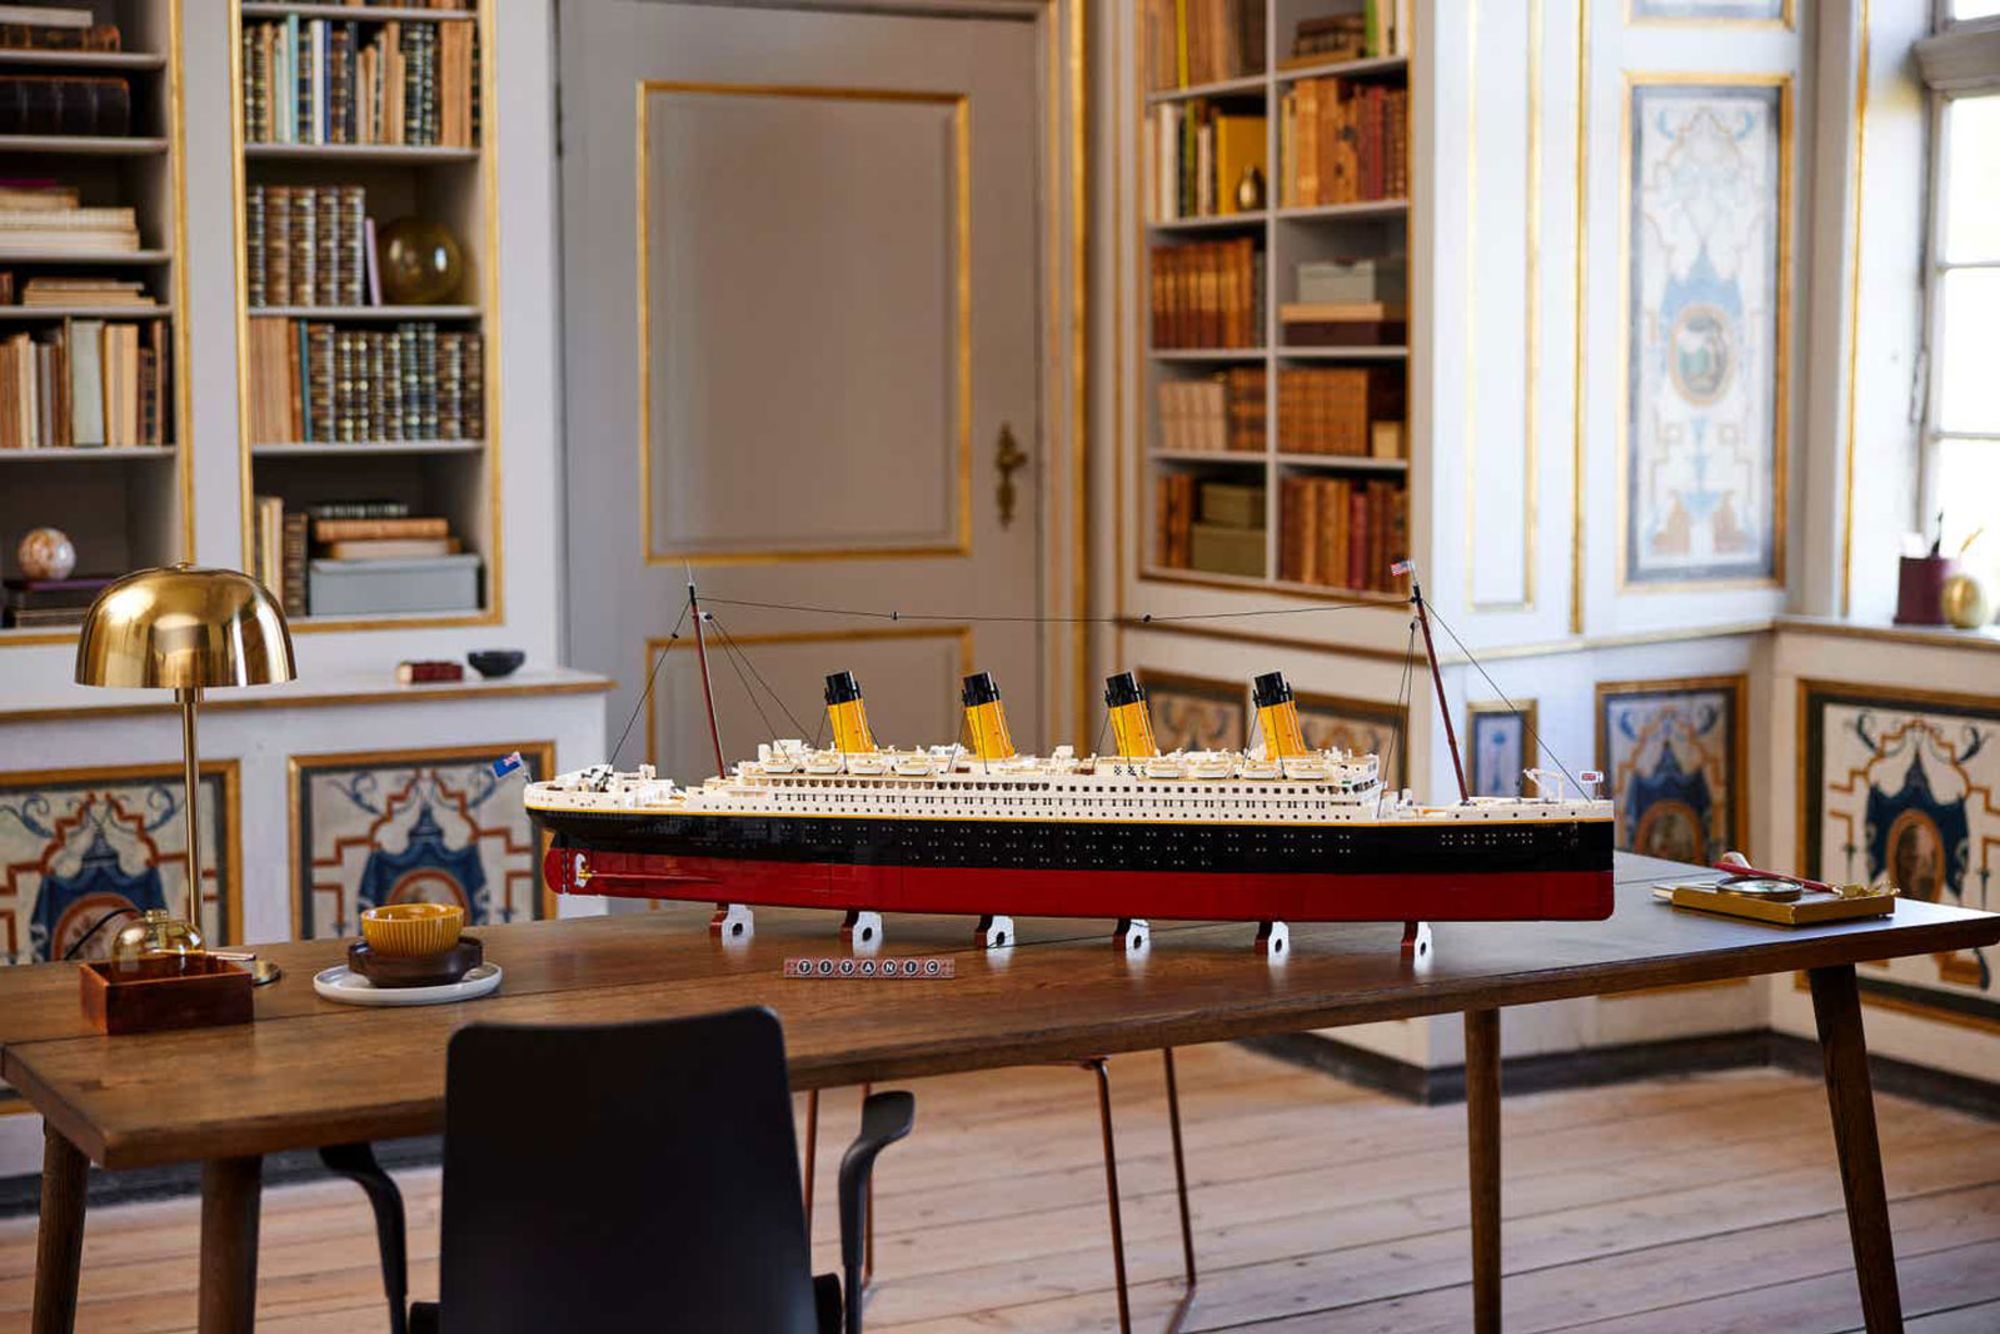 01 Lego Titanic replica